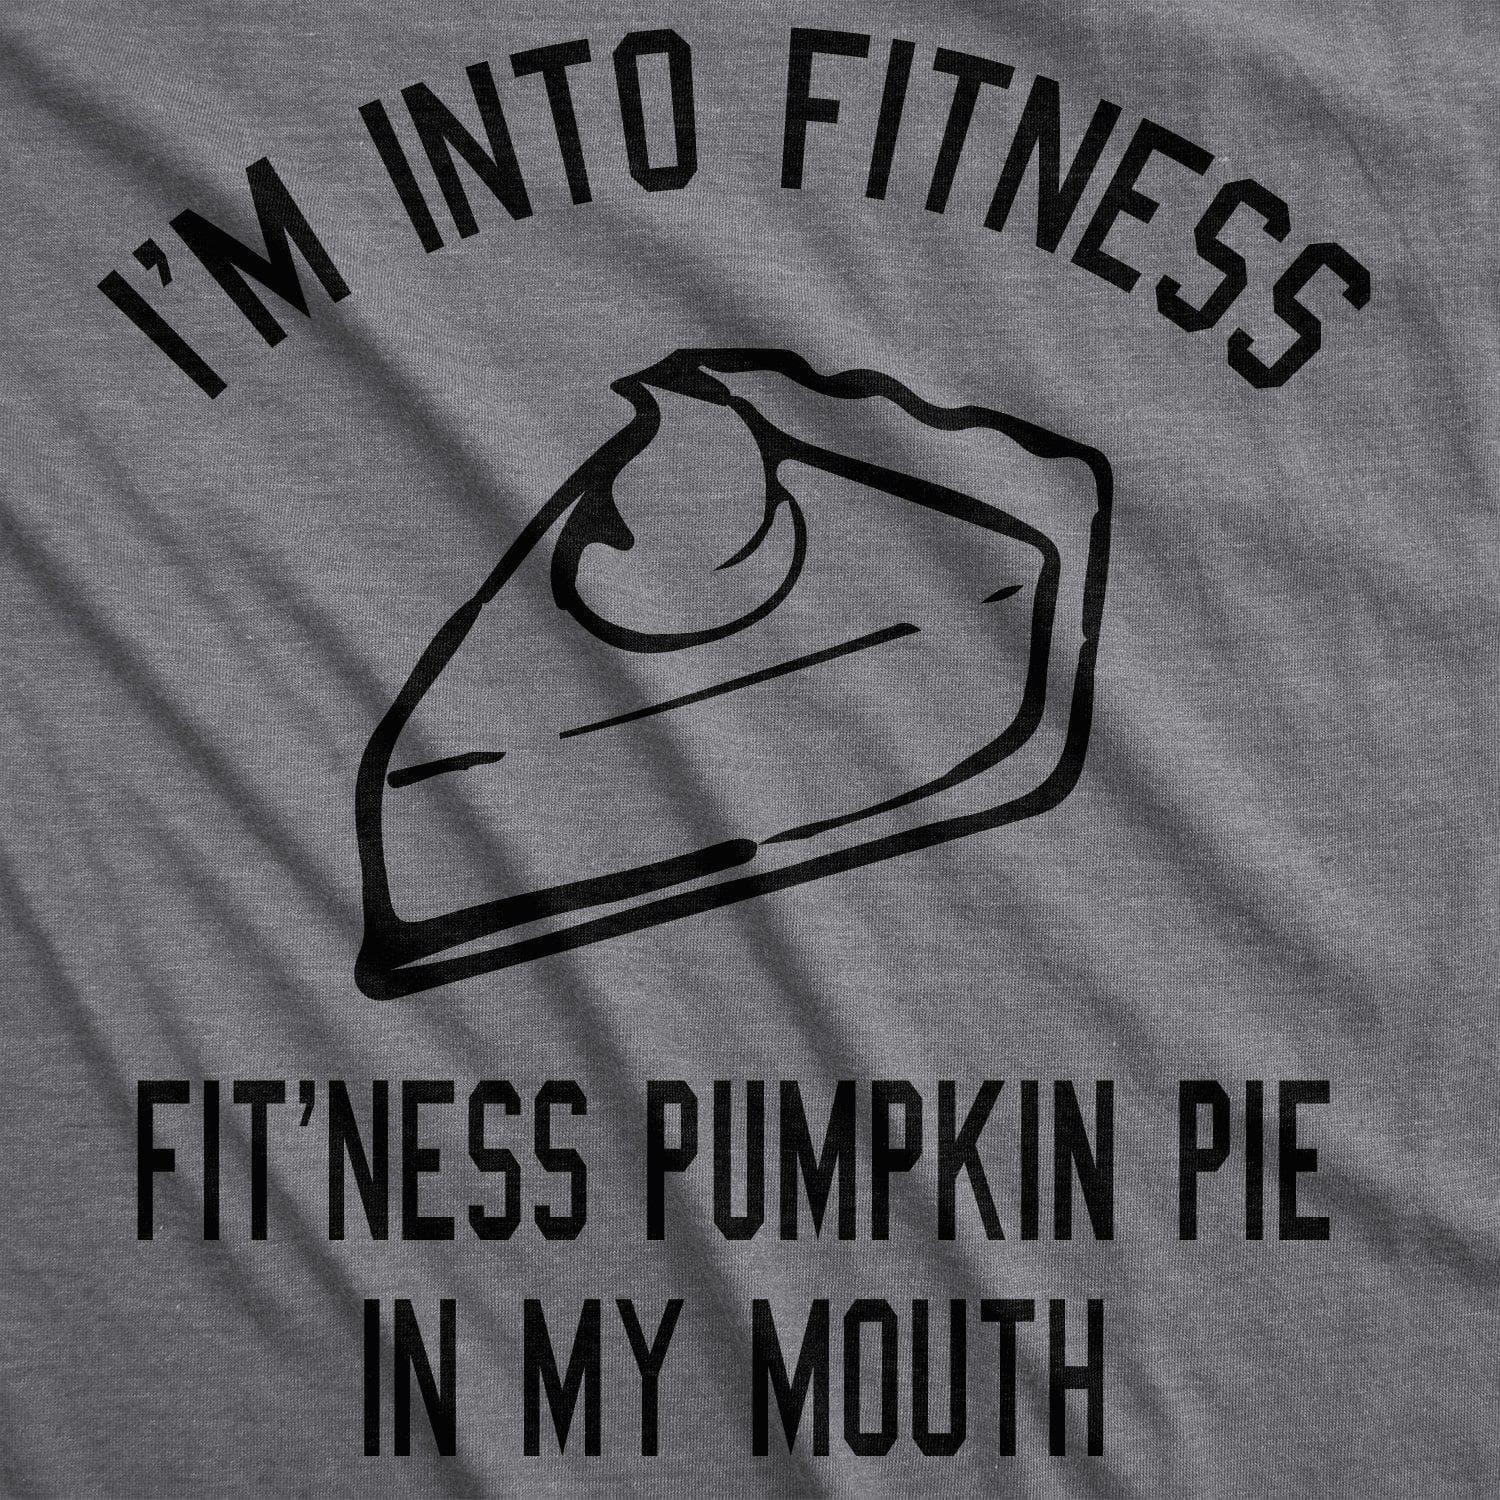 Fitness Pumpkin Pie In My Mouth Men's Tshirt - Crazy Dog T-Shirts